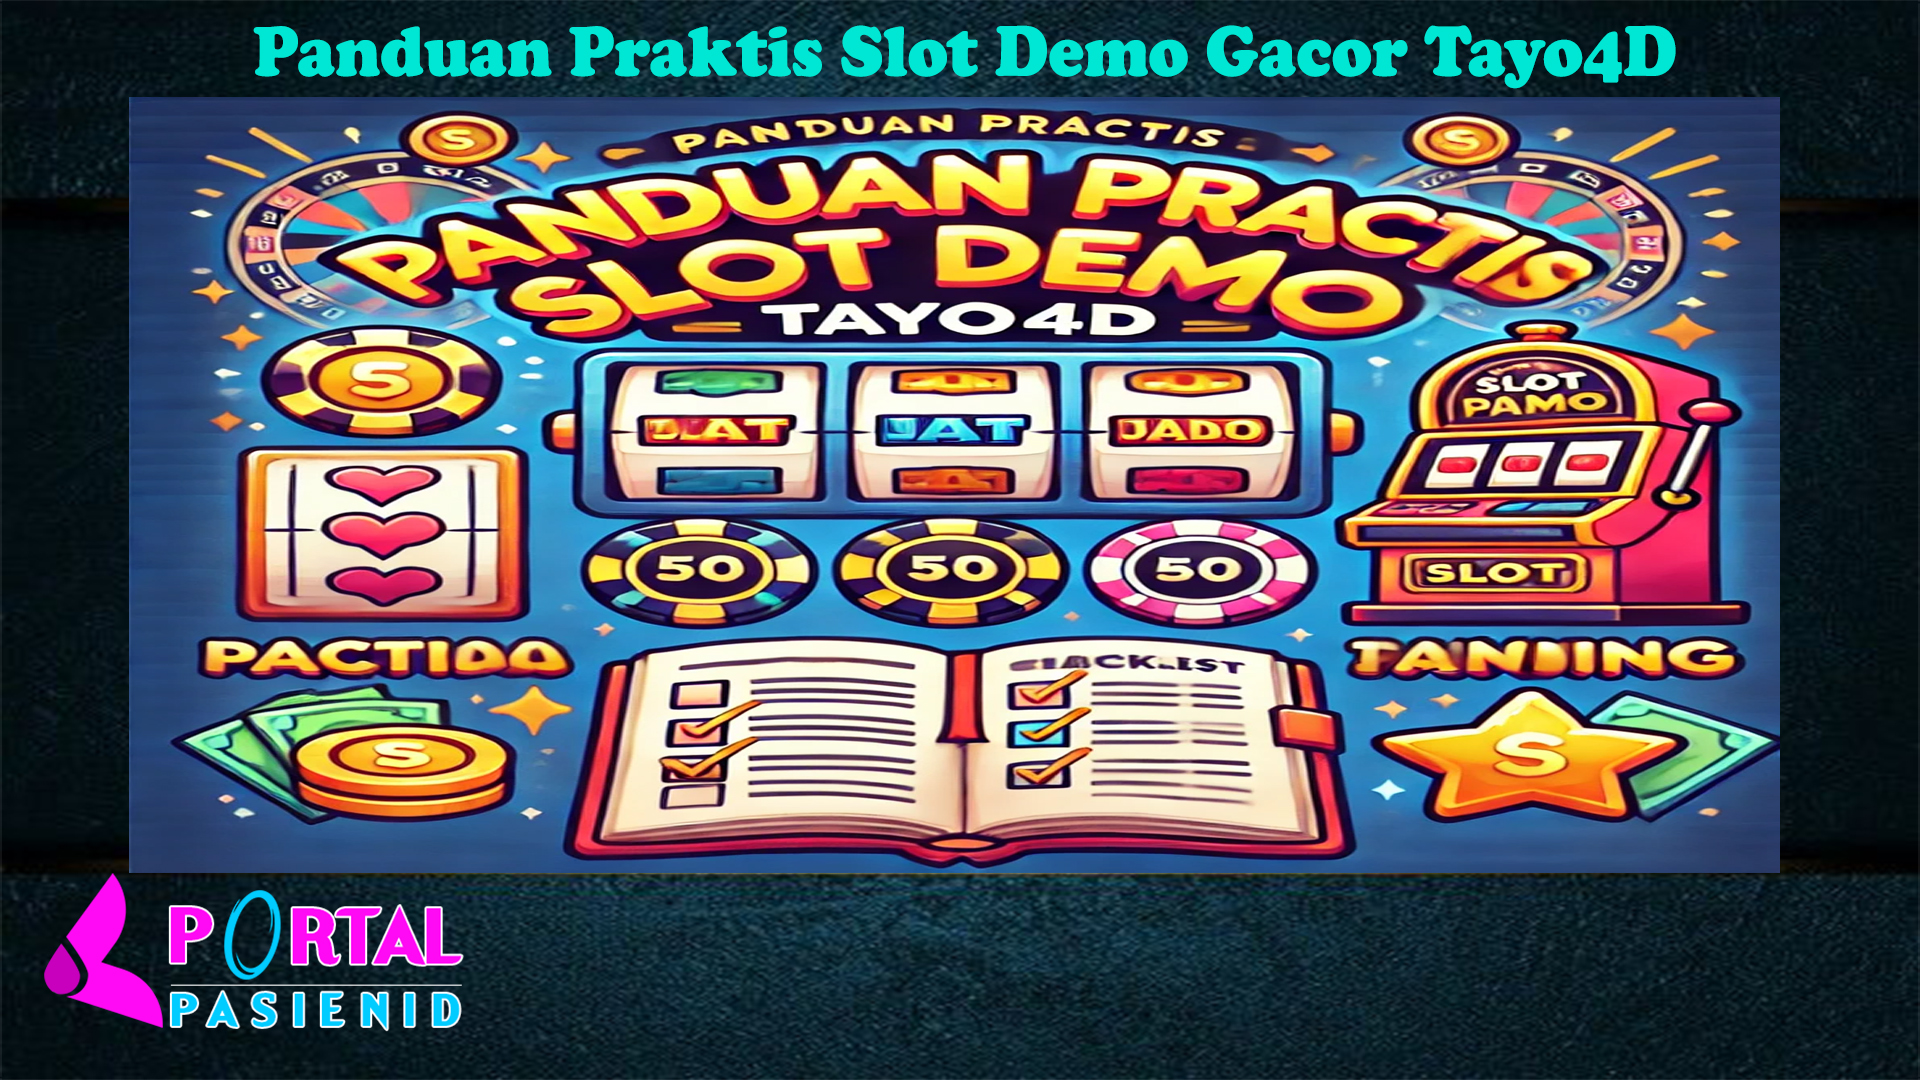 Panduan Praktis Slot Demo Gacor Tayo4D